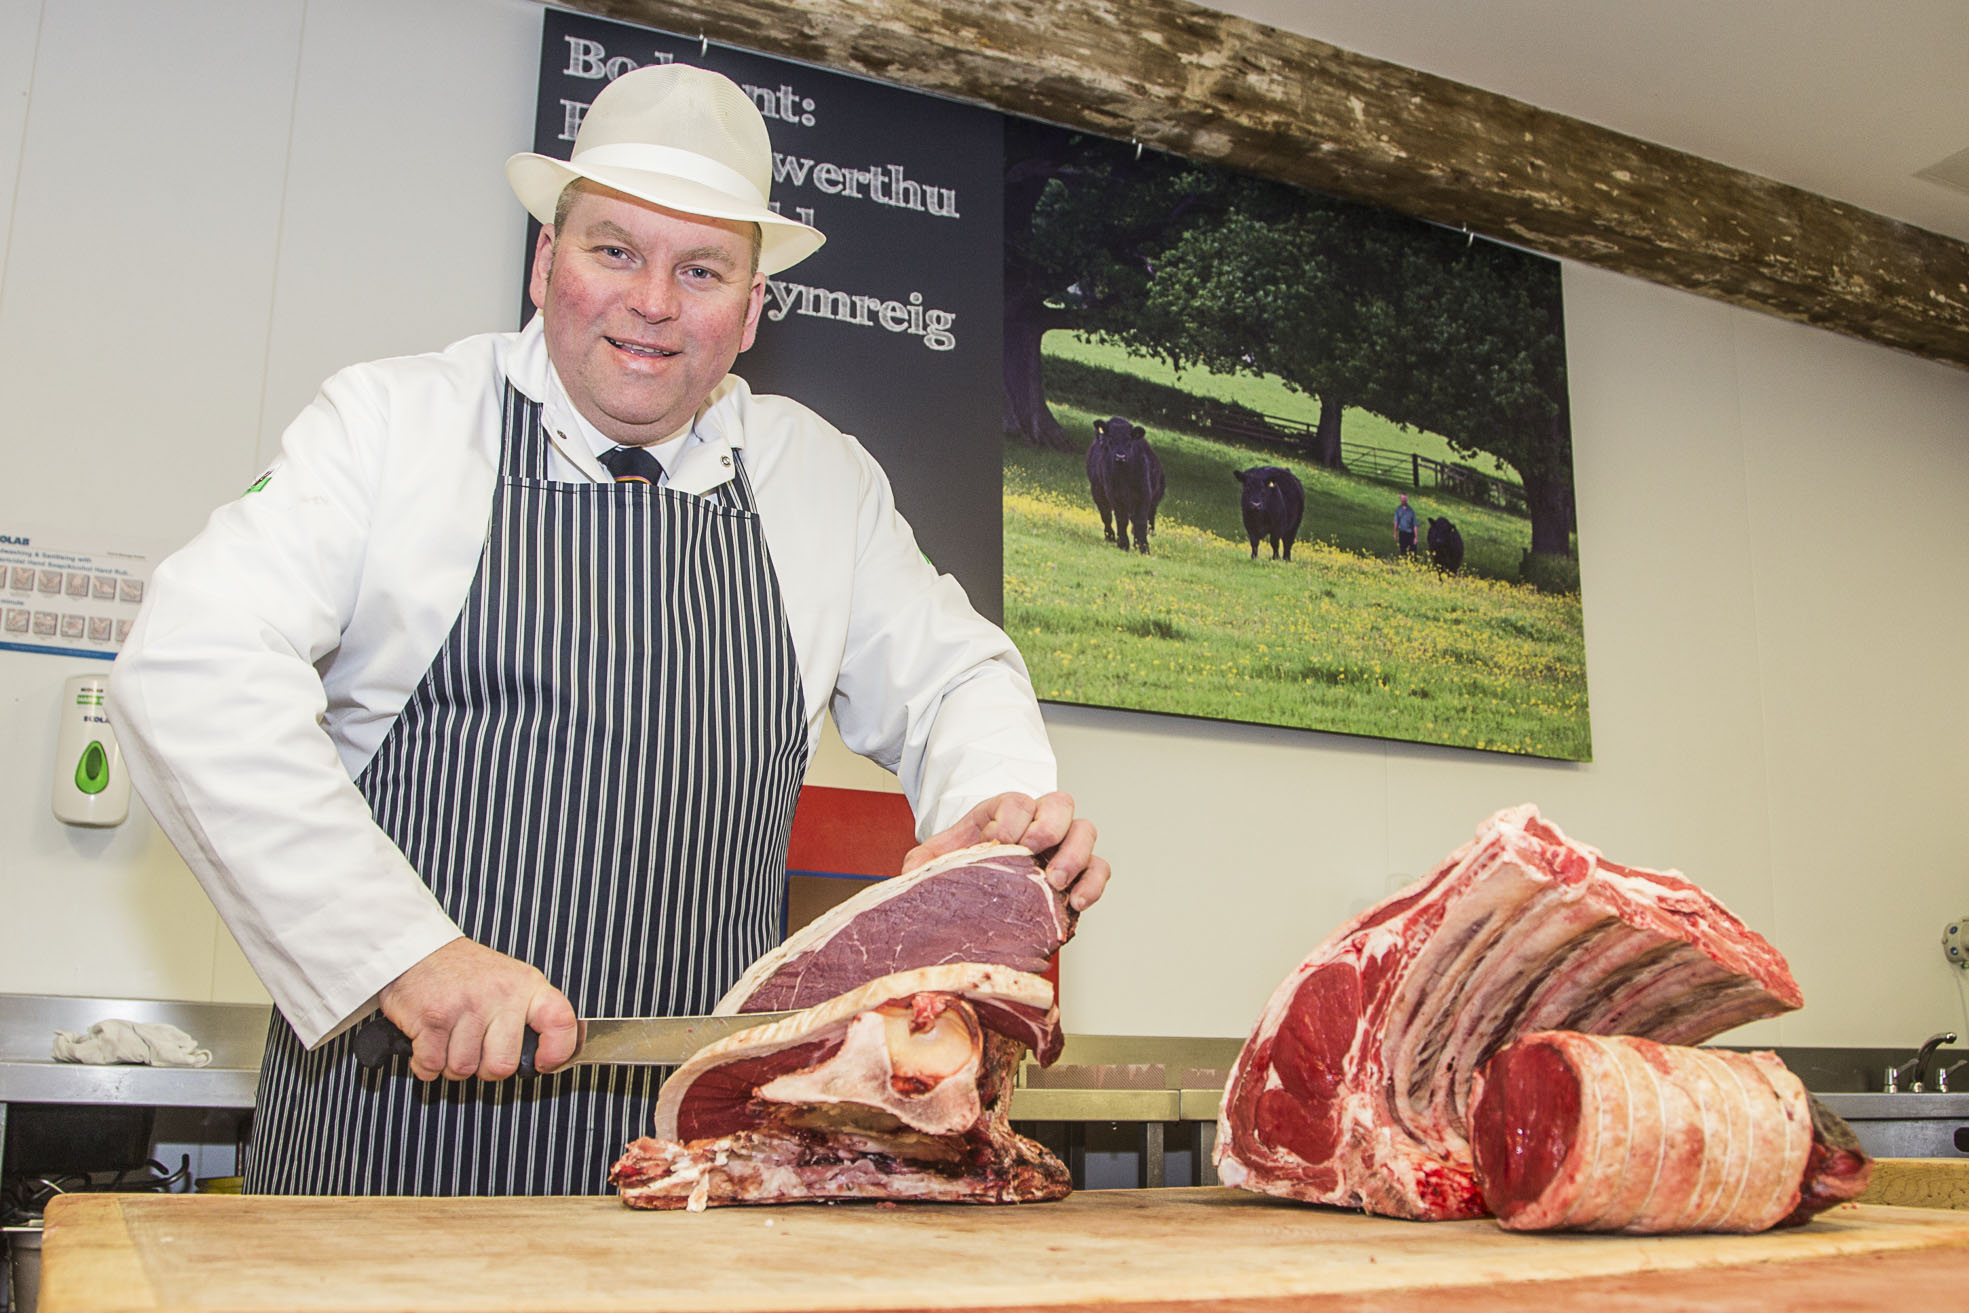 Bodnant Welsh Food Centre named as best butcher in North Wales